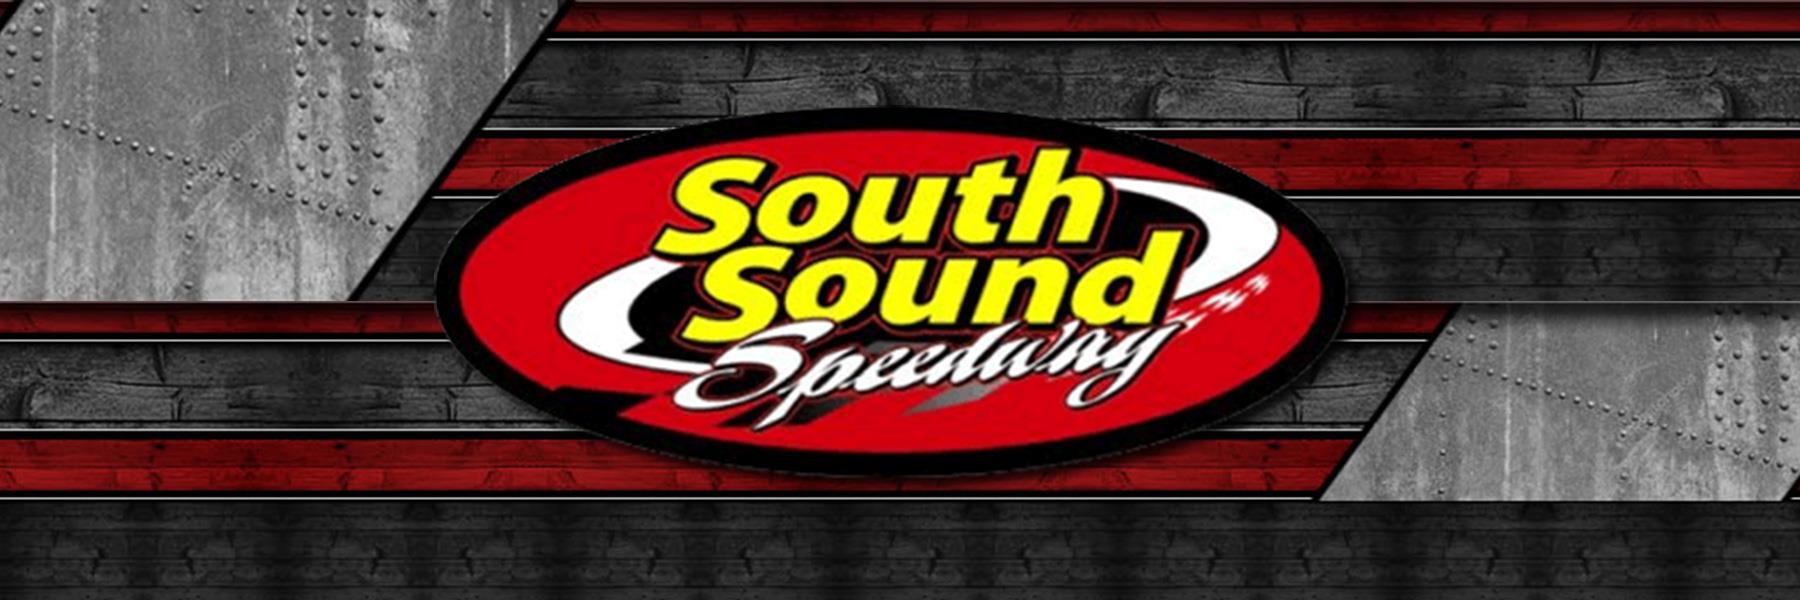 5/21/2022 - South Sound Speedway